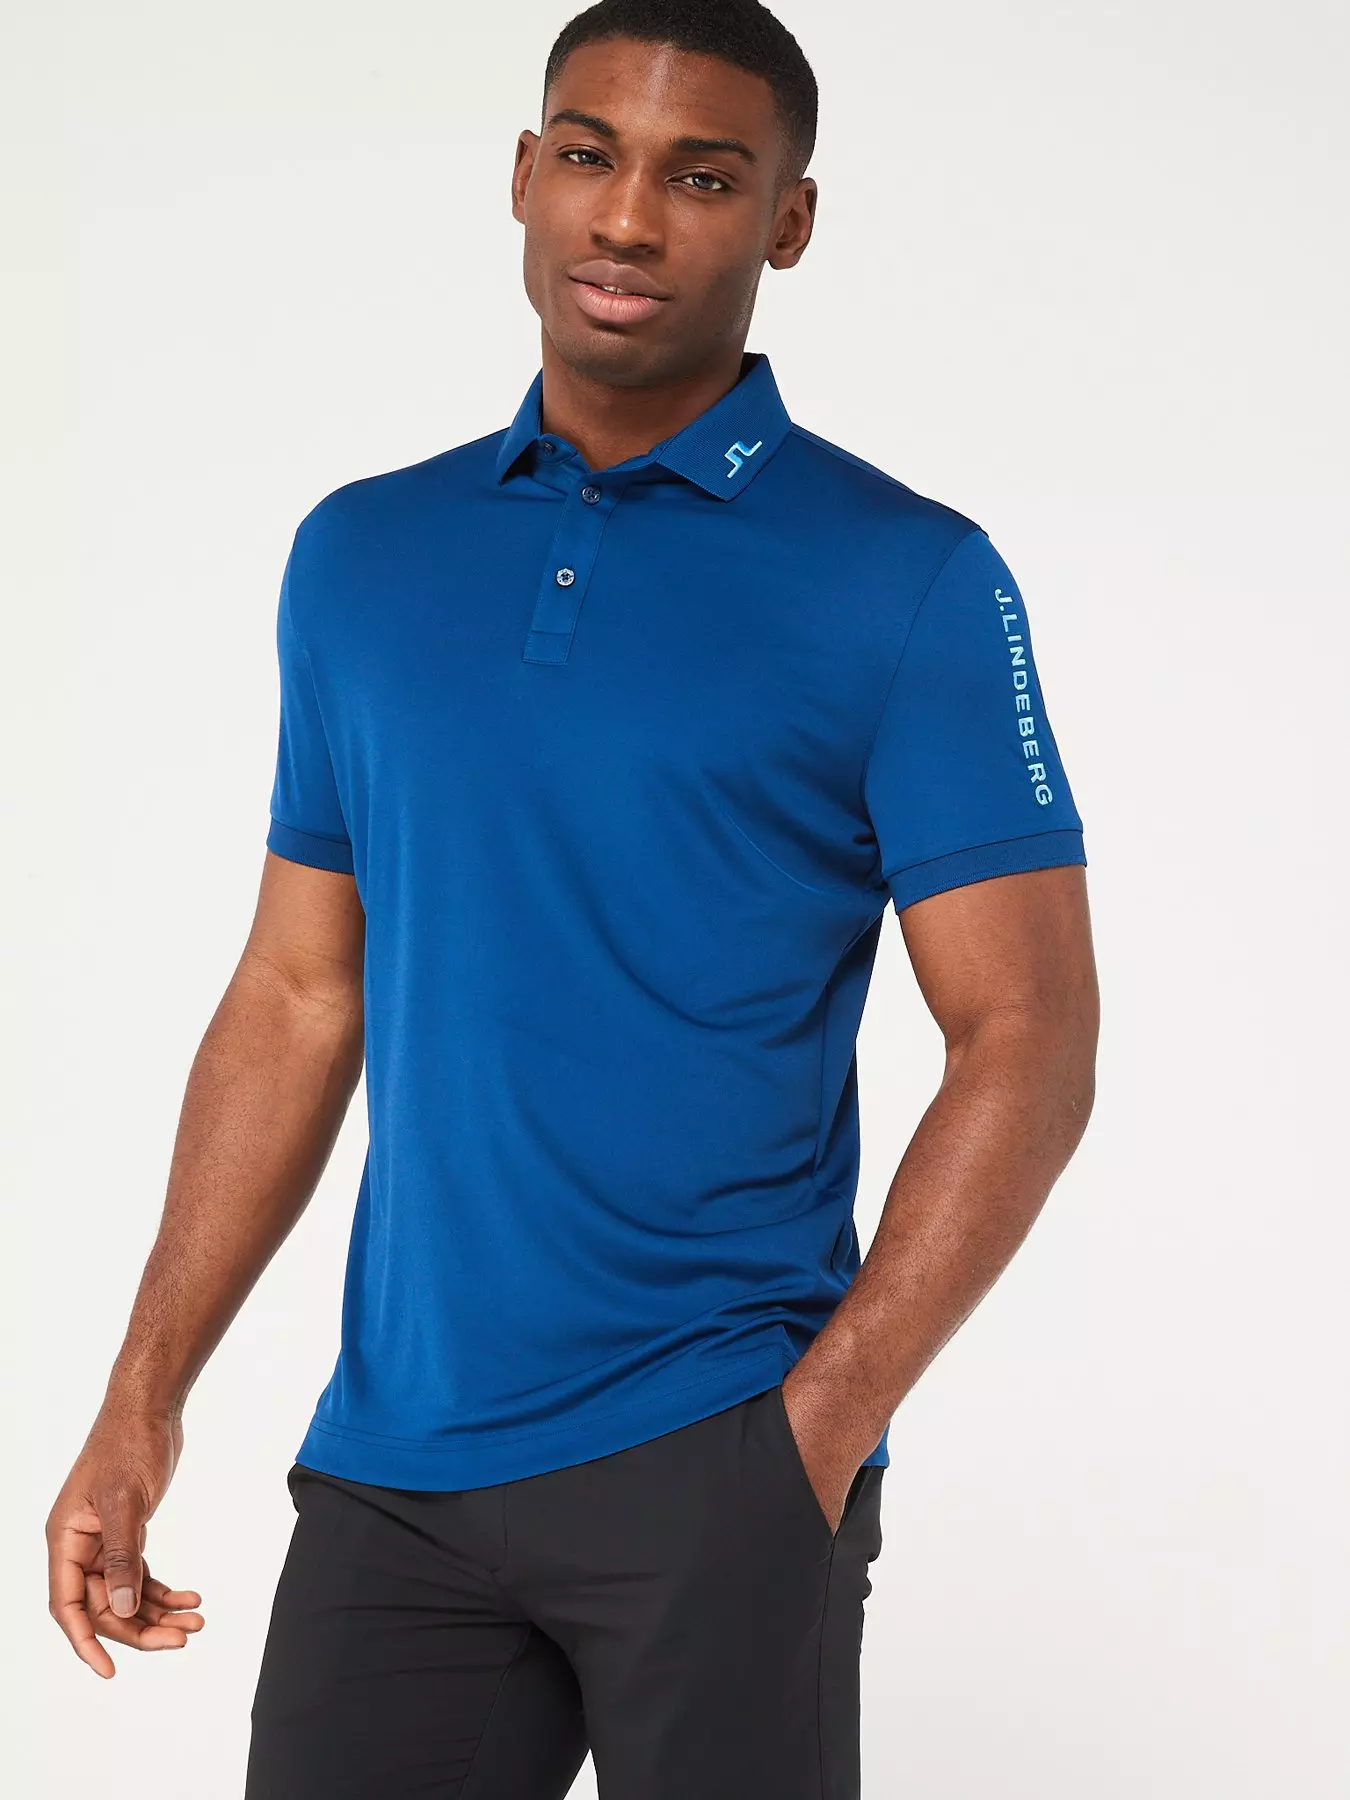 Men's Golf T-Shirts & Polos, Sports Clothing